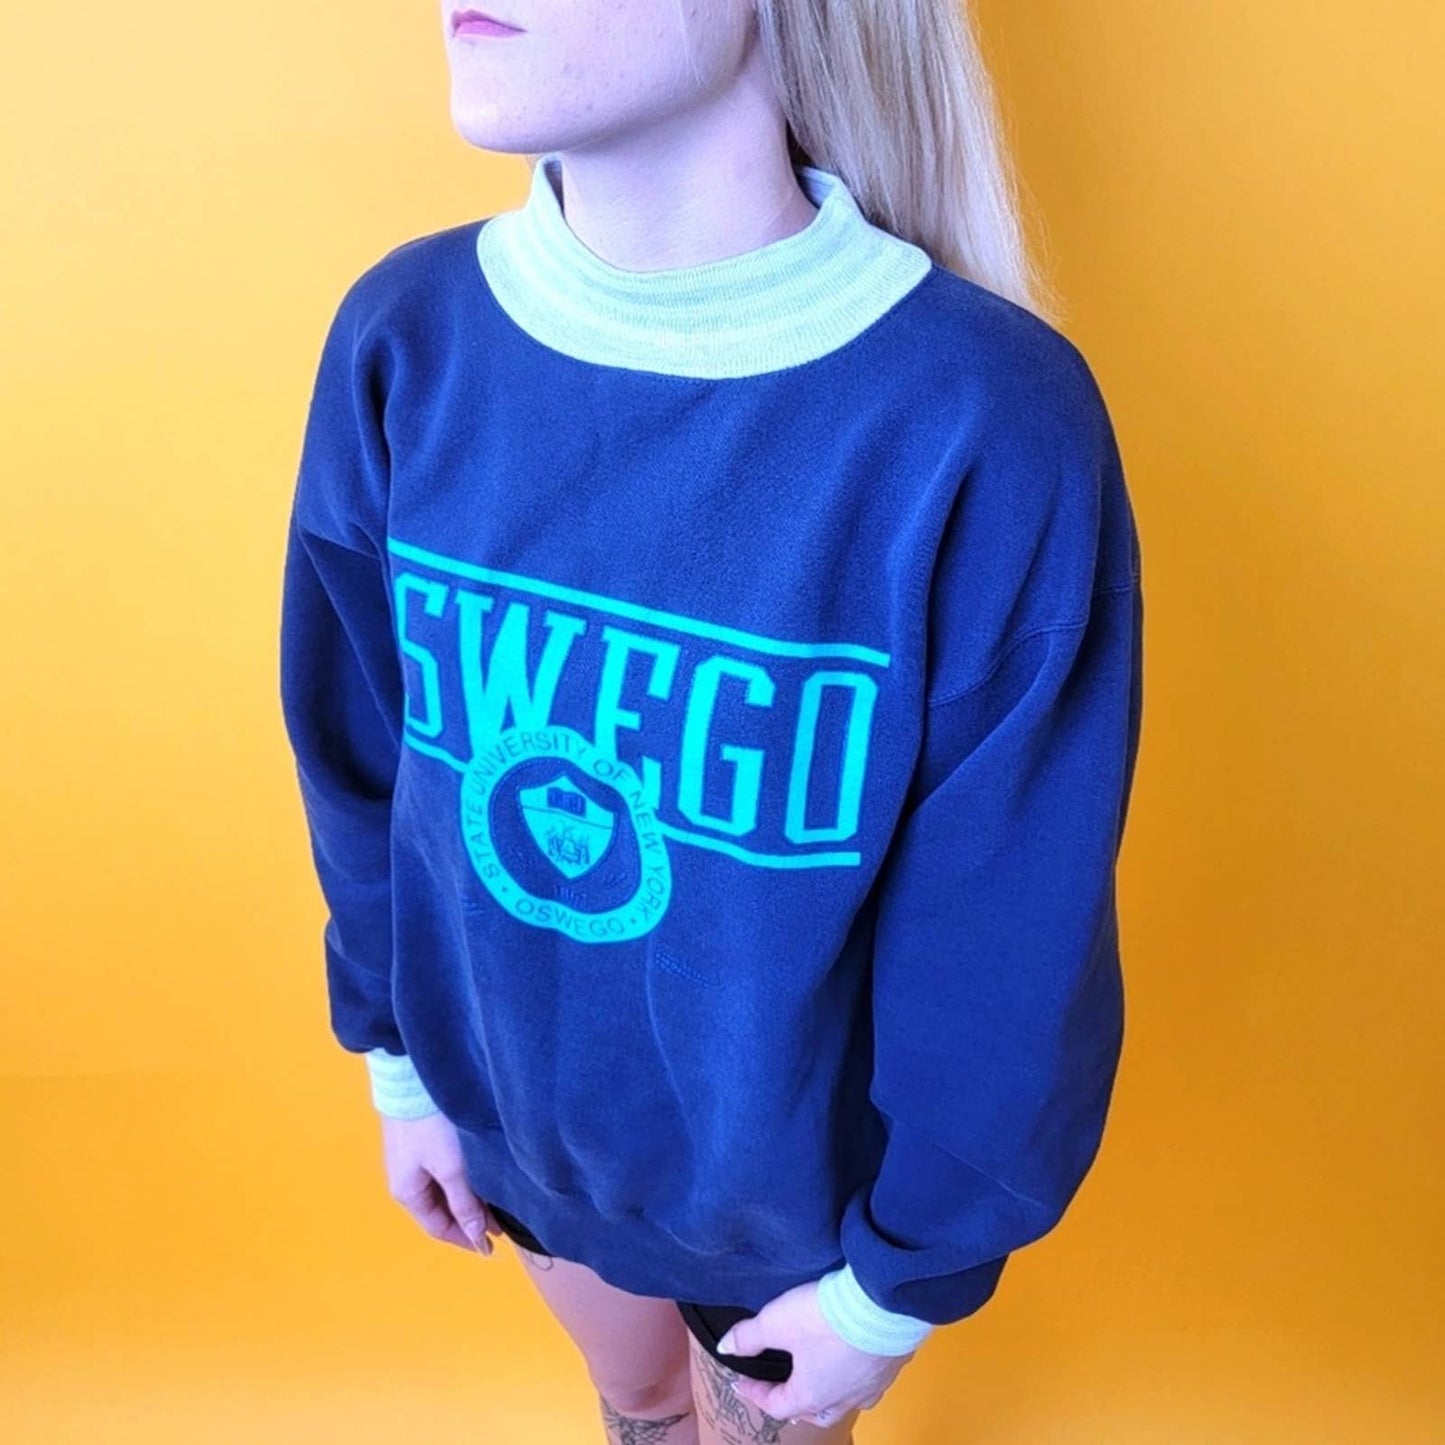 Vintage 90s Oswego State University Pullover Sweatshirt - L/XL